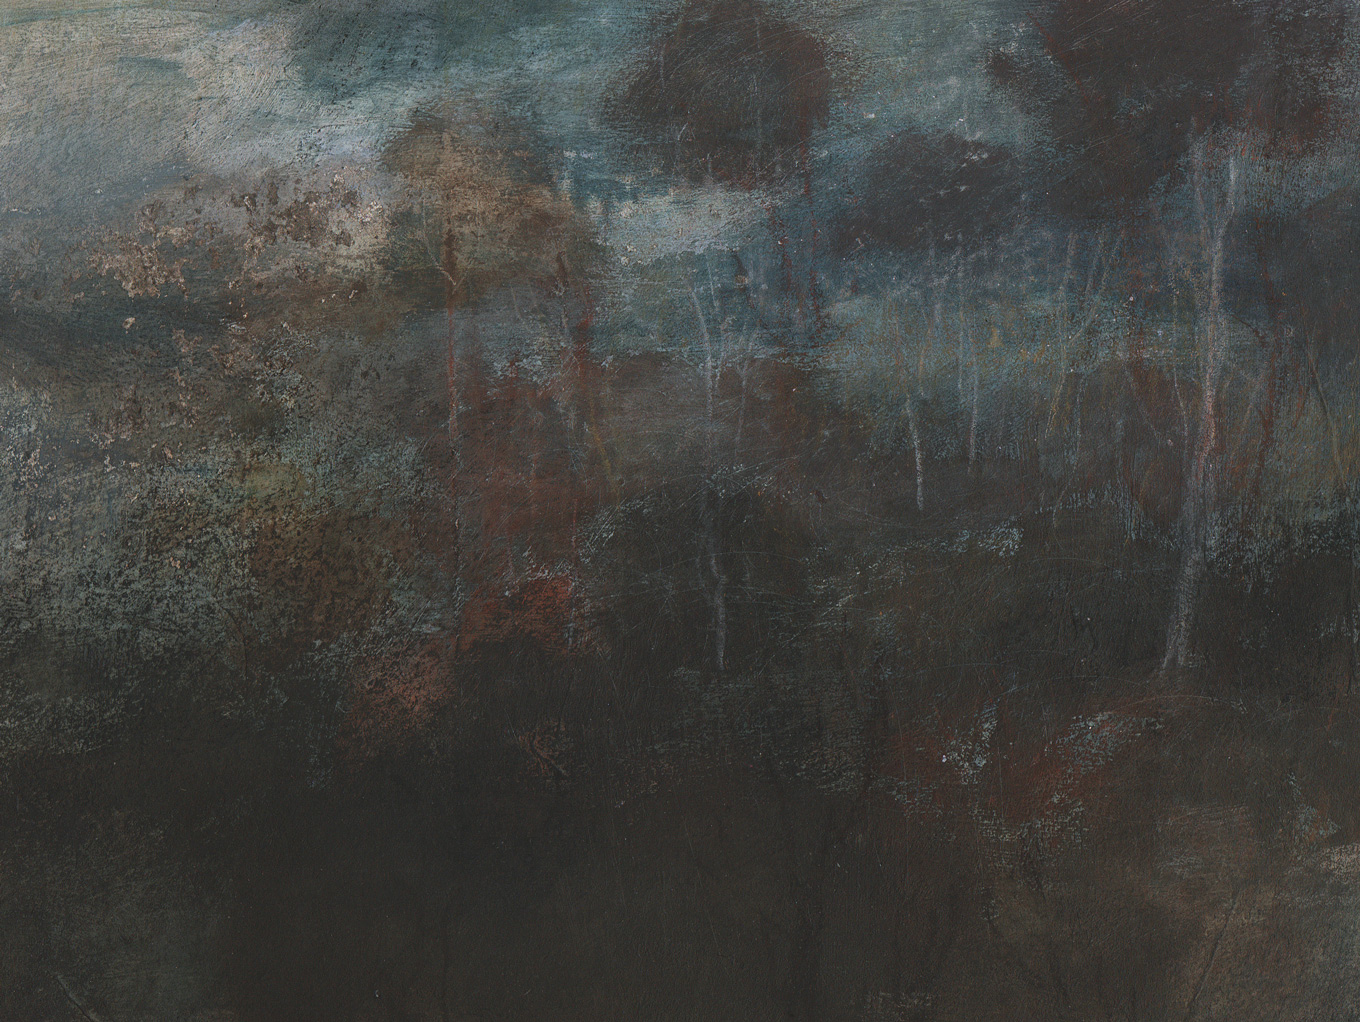 L1220 - Nicholas Herbert, British Artist, mixed media landscape painting of Chobham Common, mixed media on paper,2020